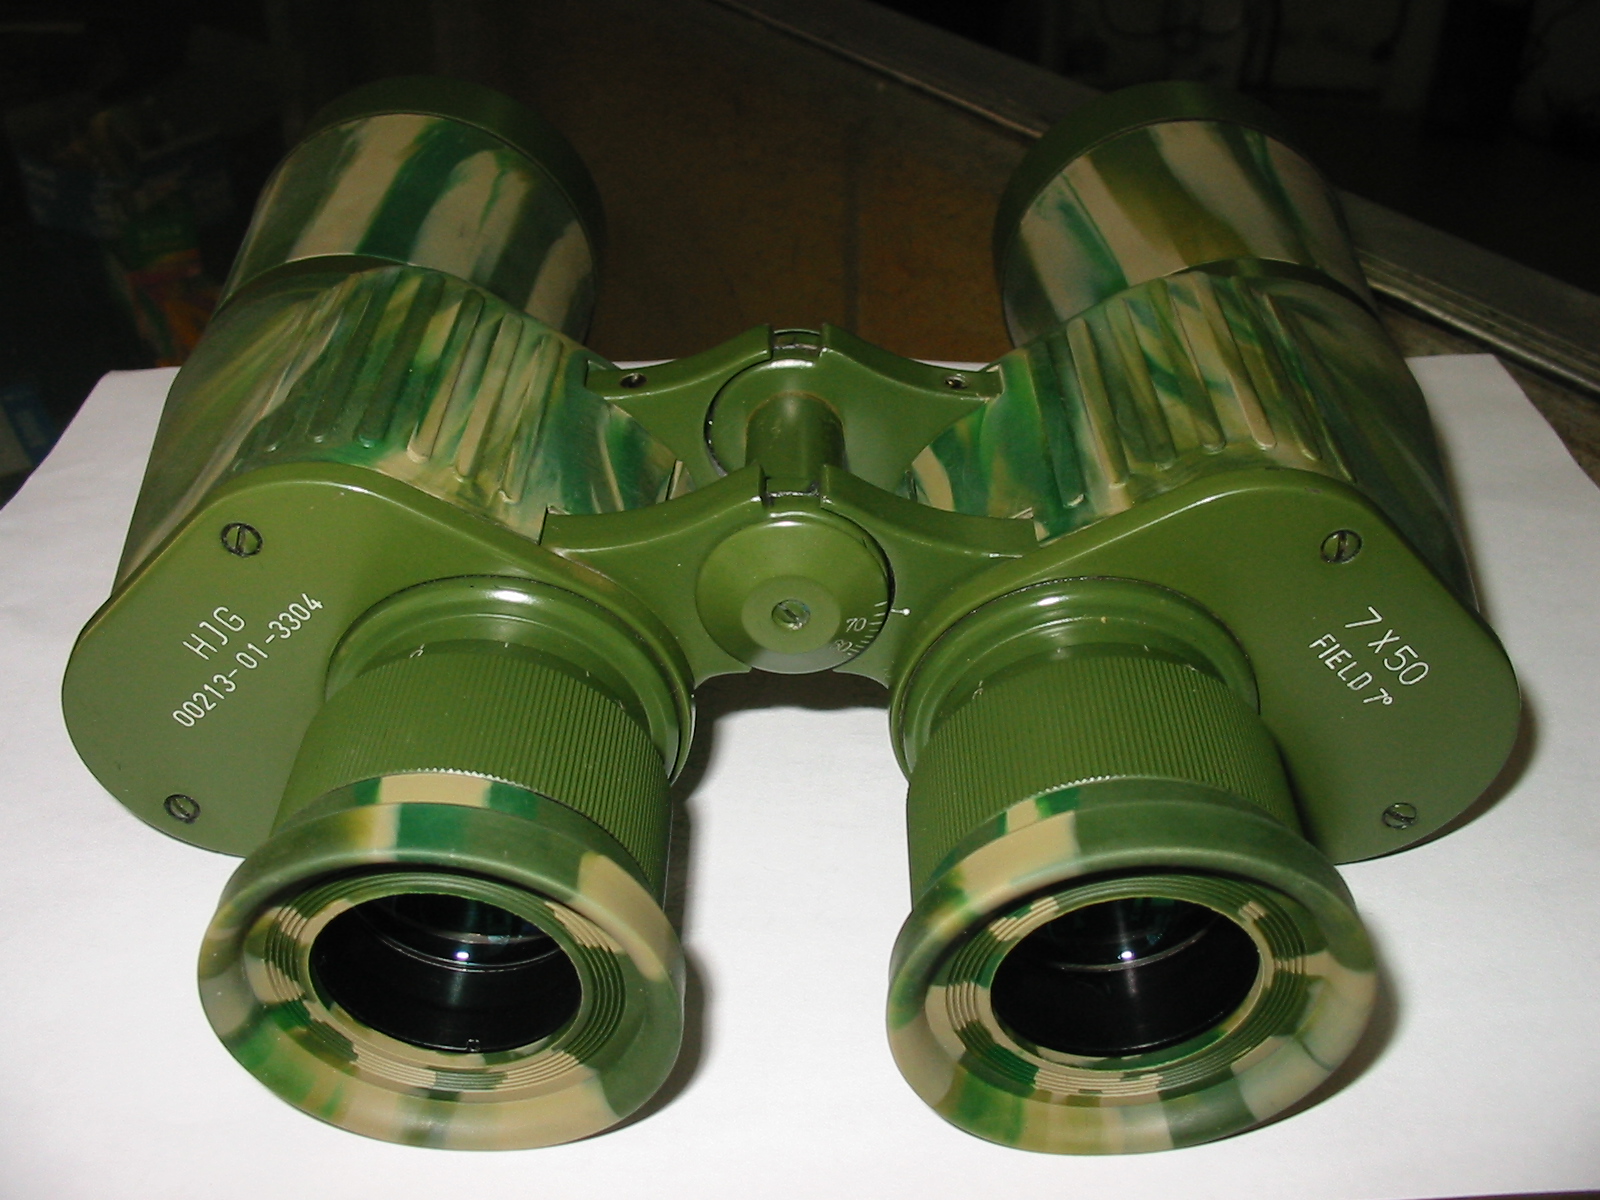 7x50 marine binoculars with reticle